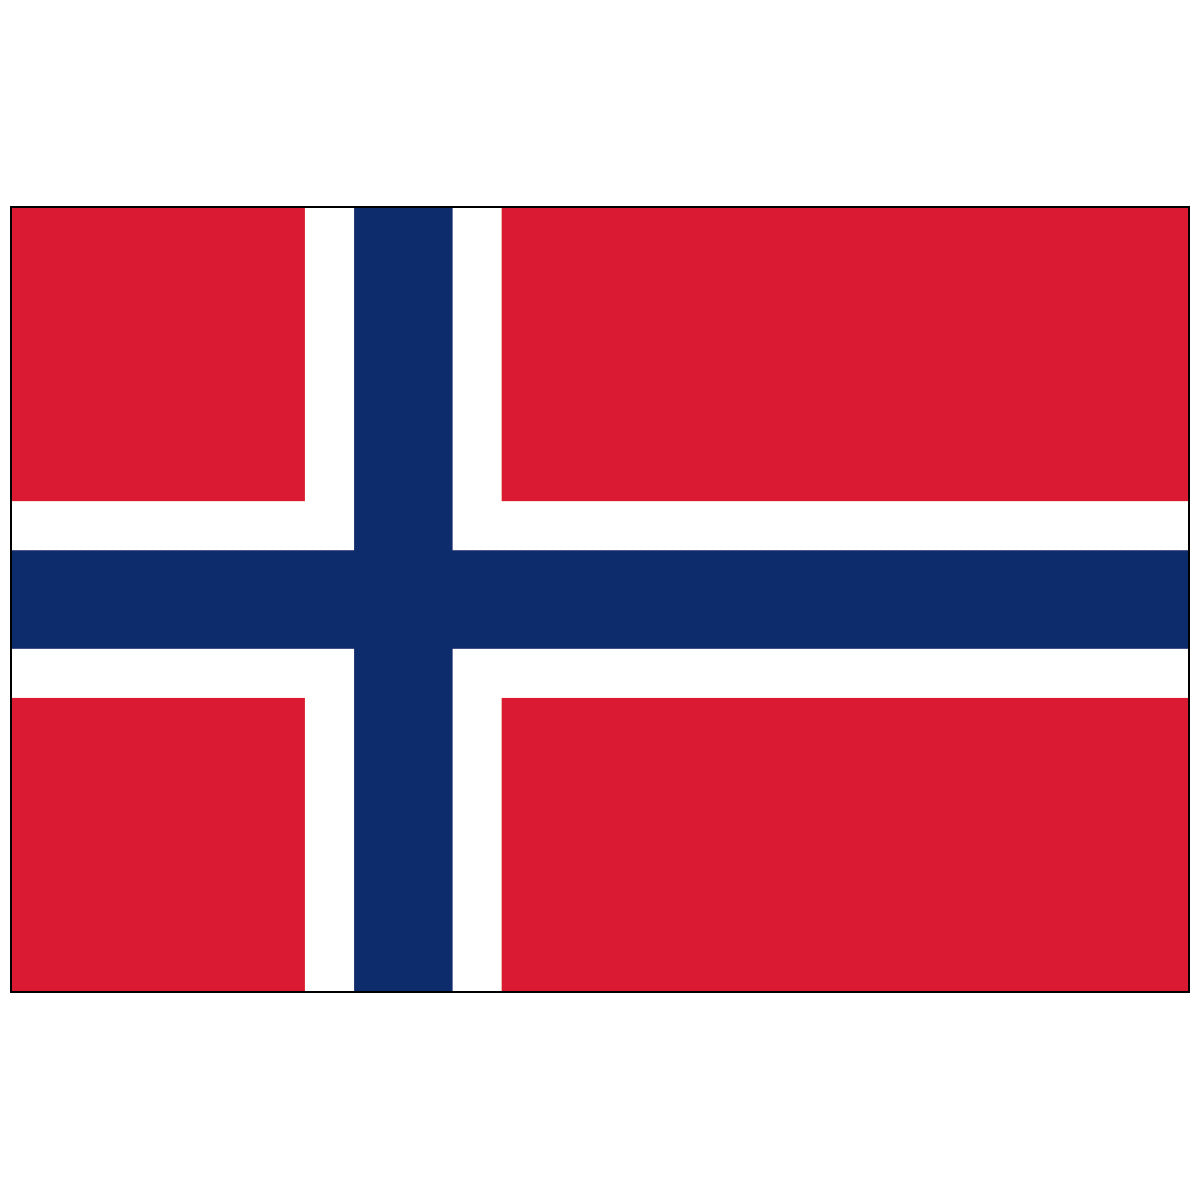 Norway - World Flag